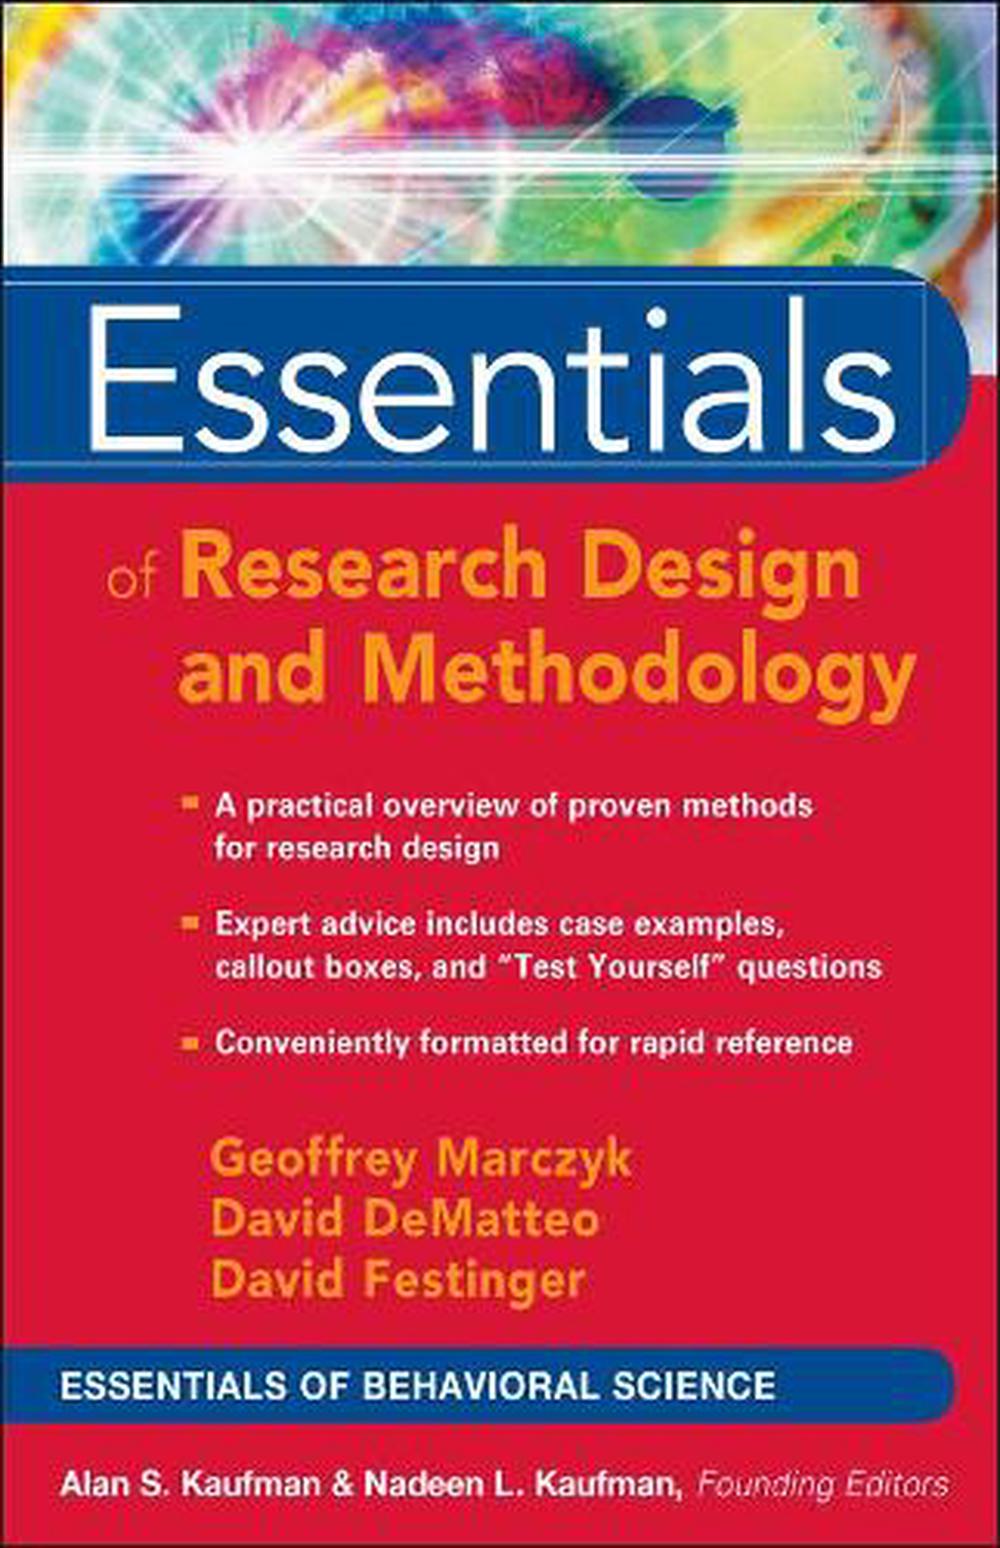 research design management book